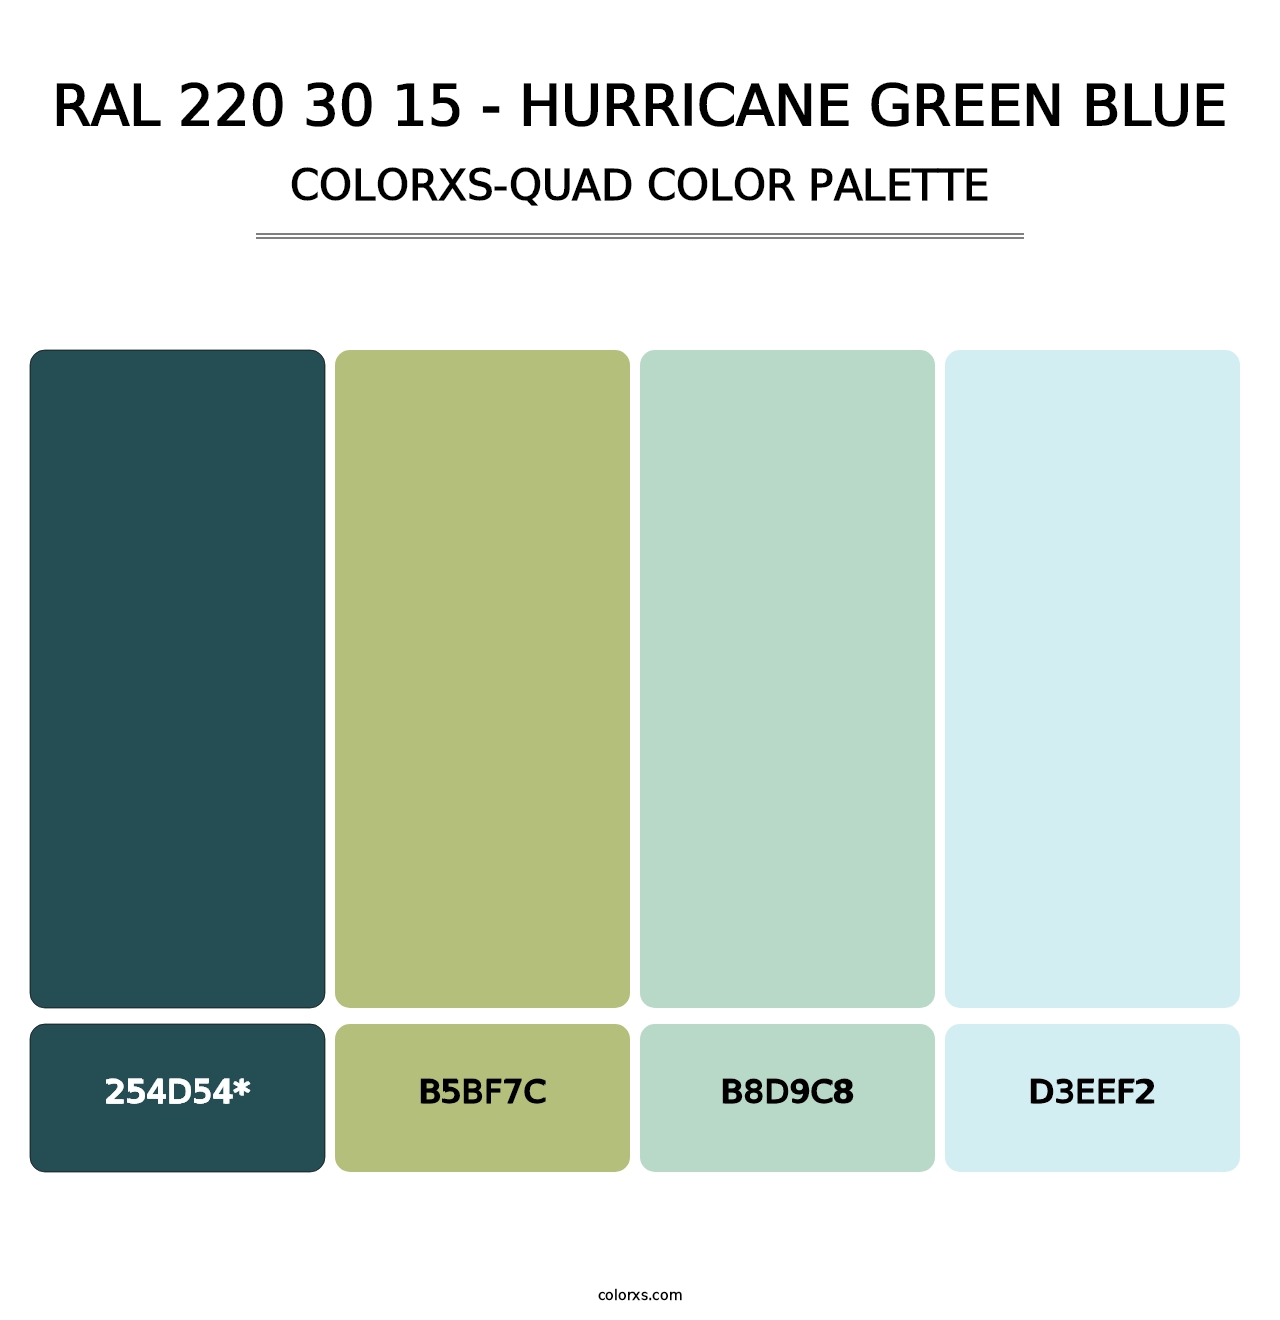 RAL 220 30 15 - Hurricane Green Blue - Colorxs Quad Palette